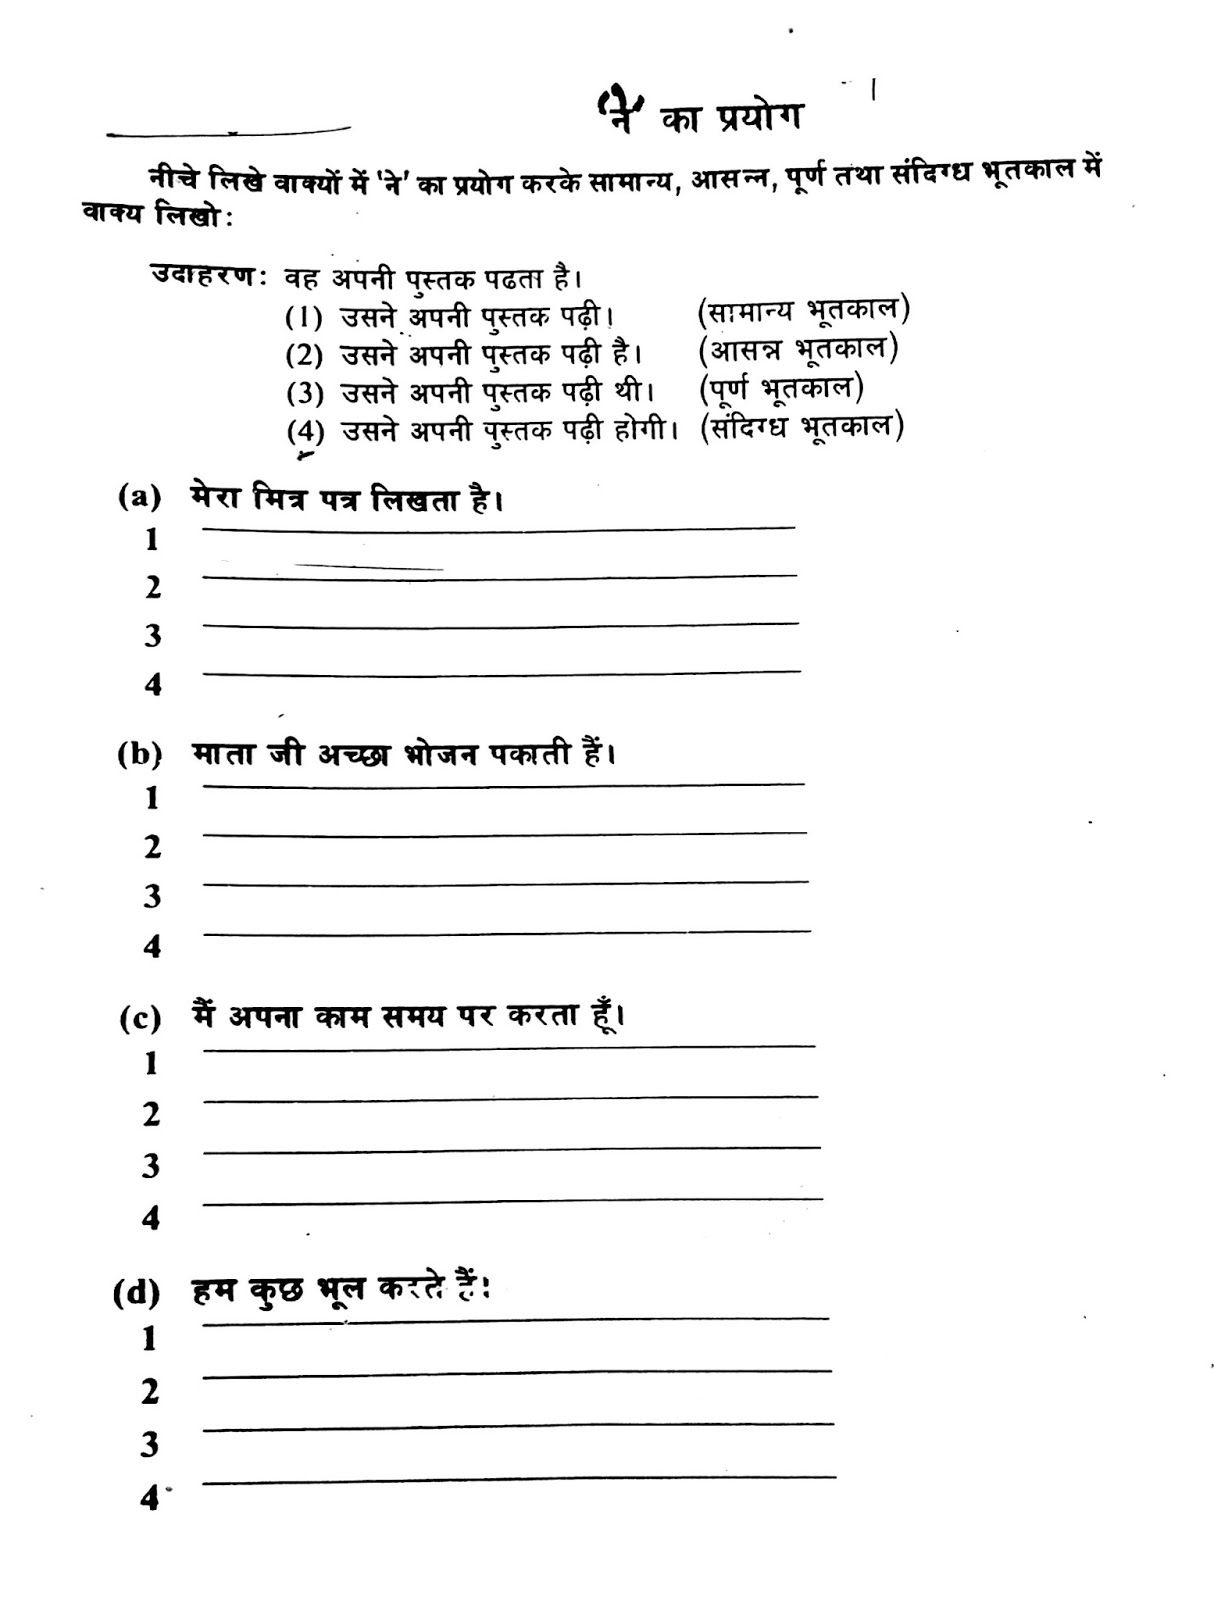 hindi-grammar-work-sheet-collection-for-classes-5-6-7-8-tenses-work-sheets-for-classes-3-4